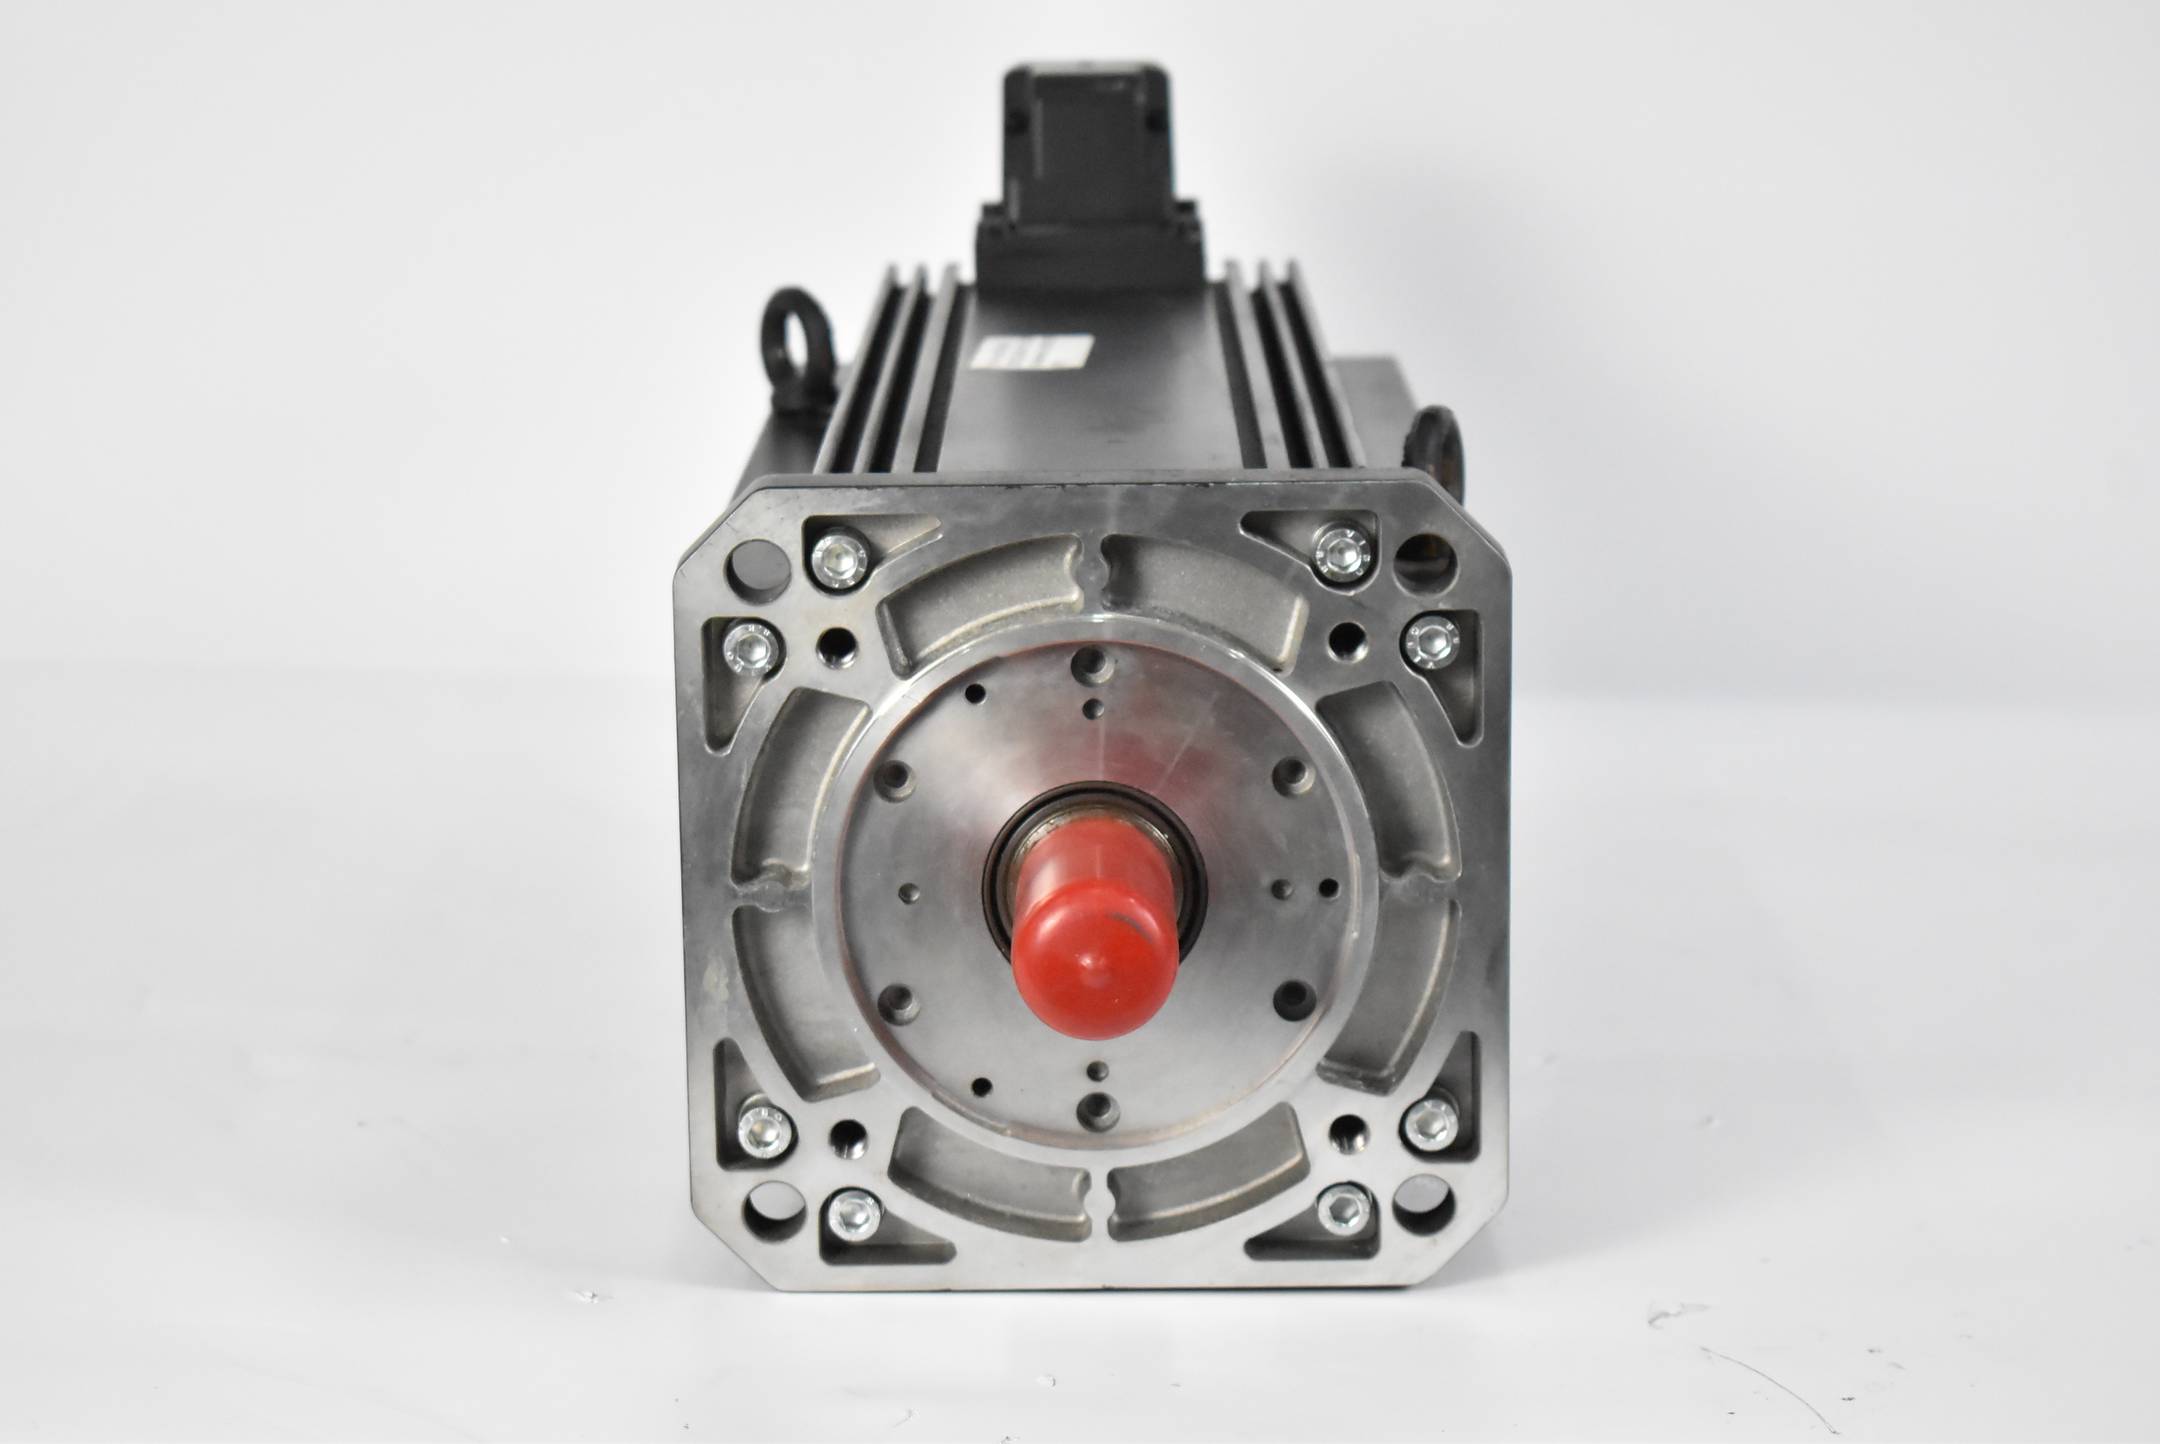 Rexroth Motor 38Nm 88,4A 4000rpm MDD112D-N-040-N2L-130GB0 ( R911280692 )